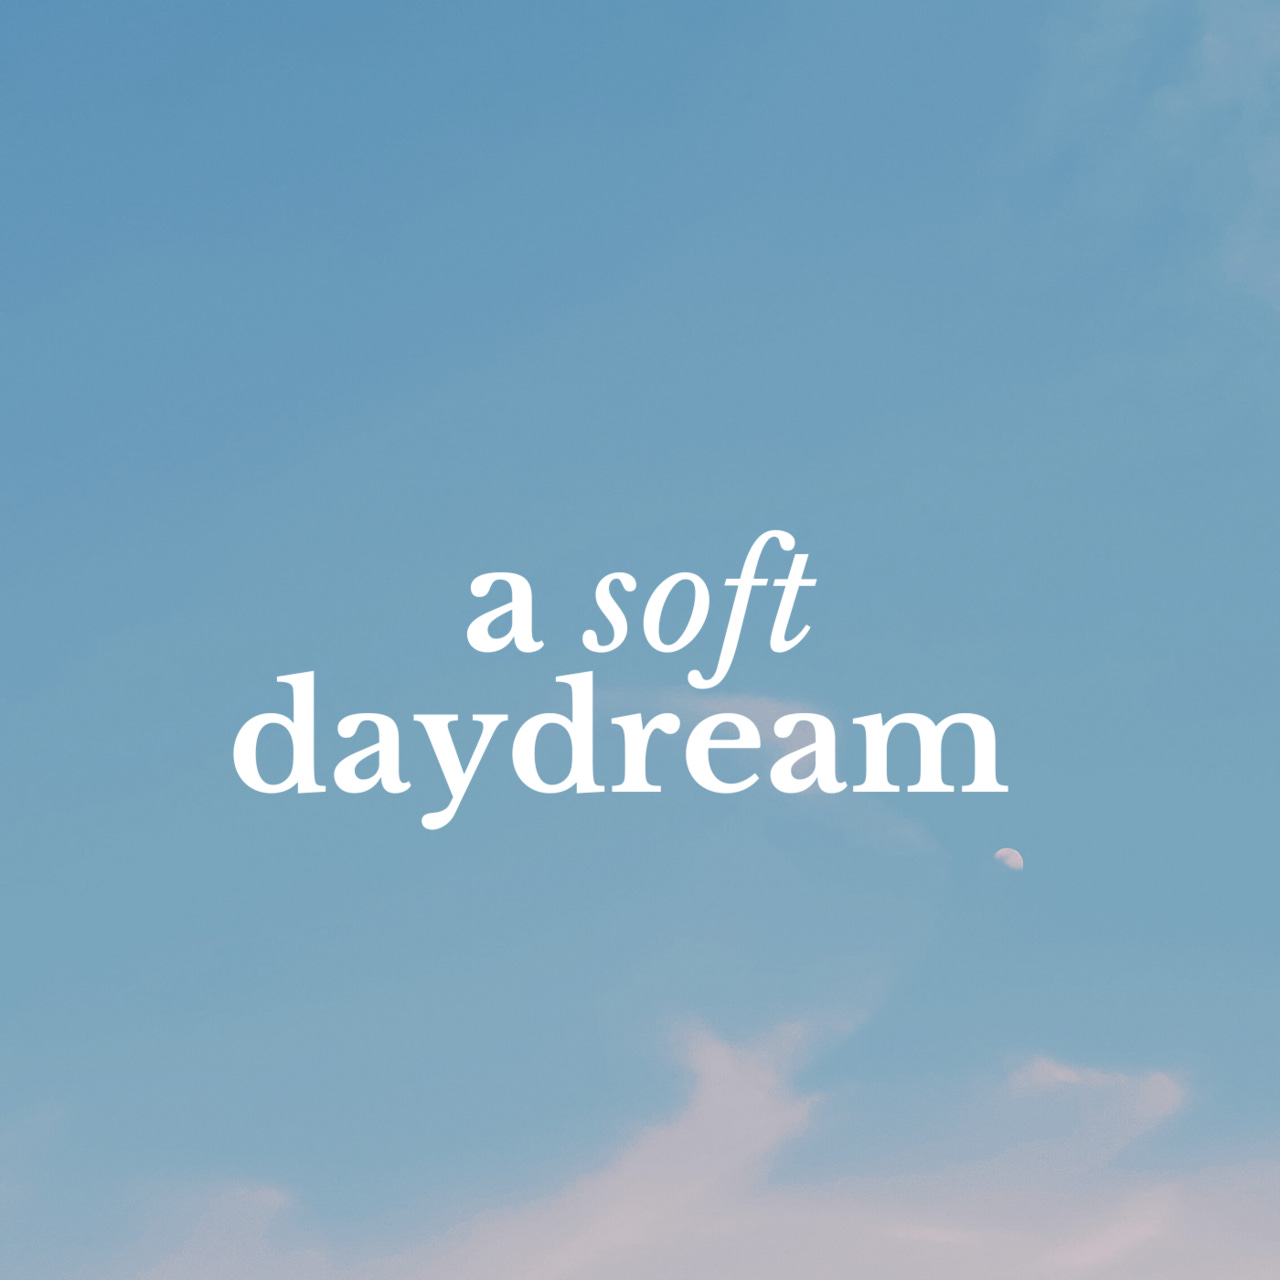 a soft daydream